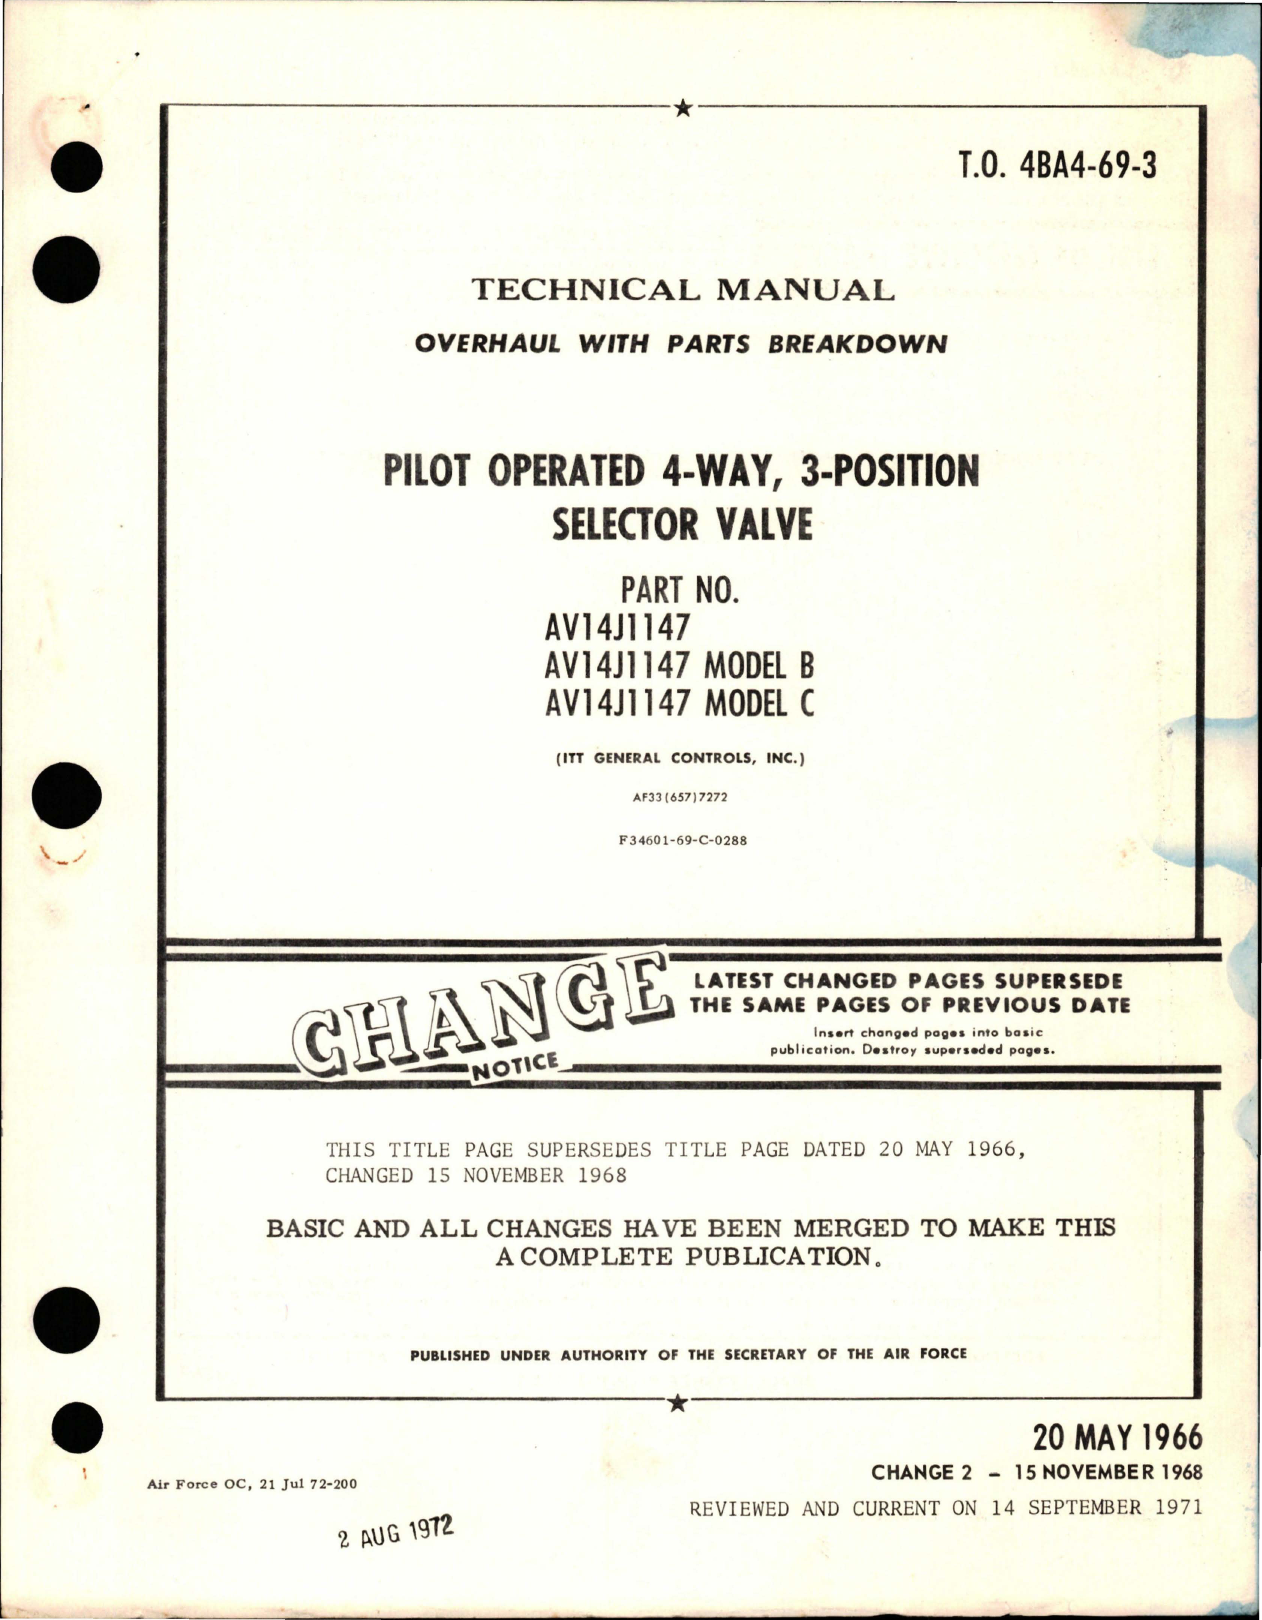 Sample page 1 from AirCorps Library document: Overhaul with Parts Breakdown for Pilot Operated 4-Way, 3-Position Selector Valve - Parts AV14J1147, AV14J1147 - B, AV14J1147 - C